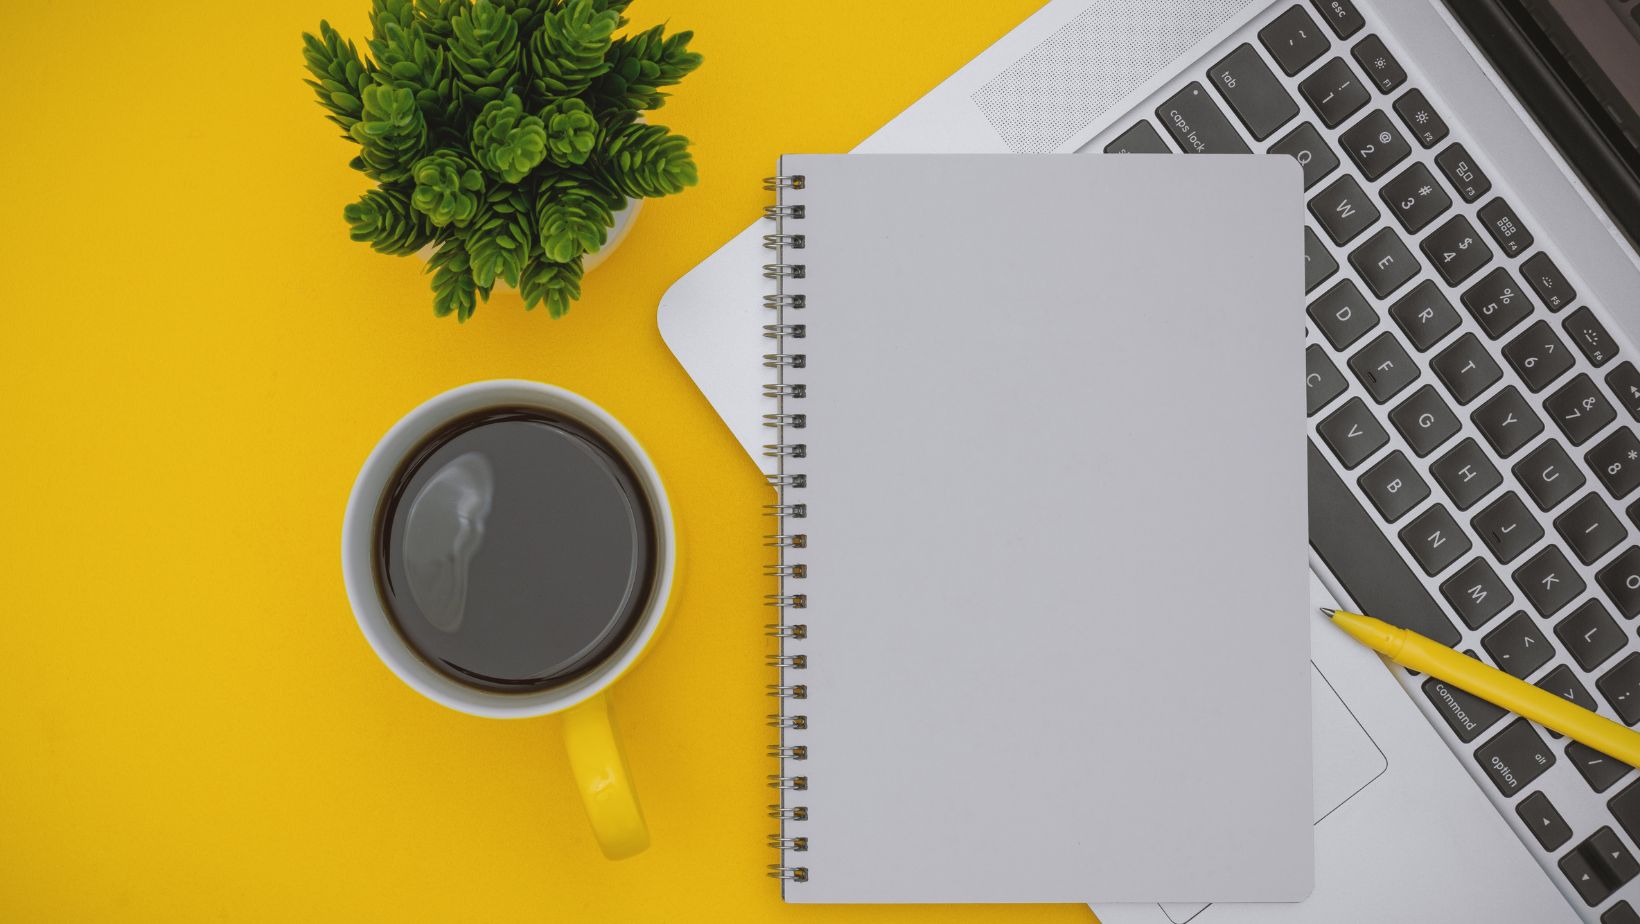 Laptop and coffee mug on yellow background